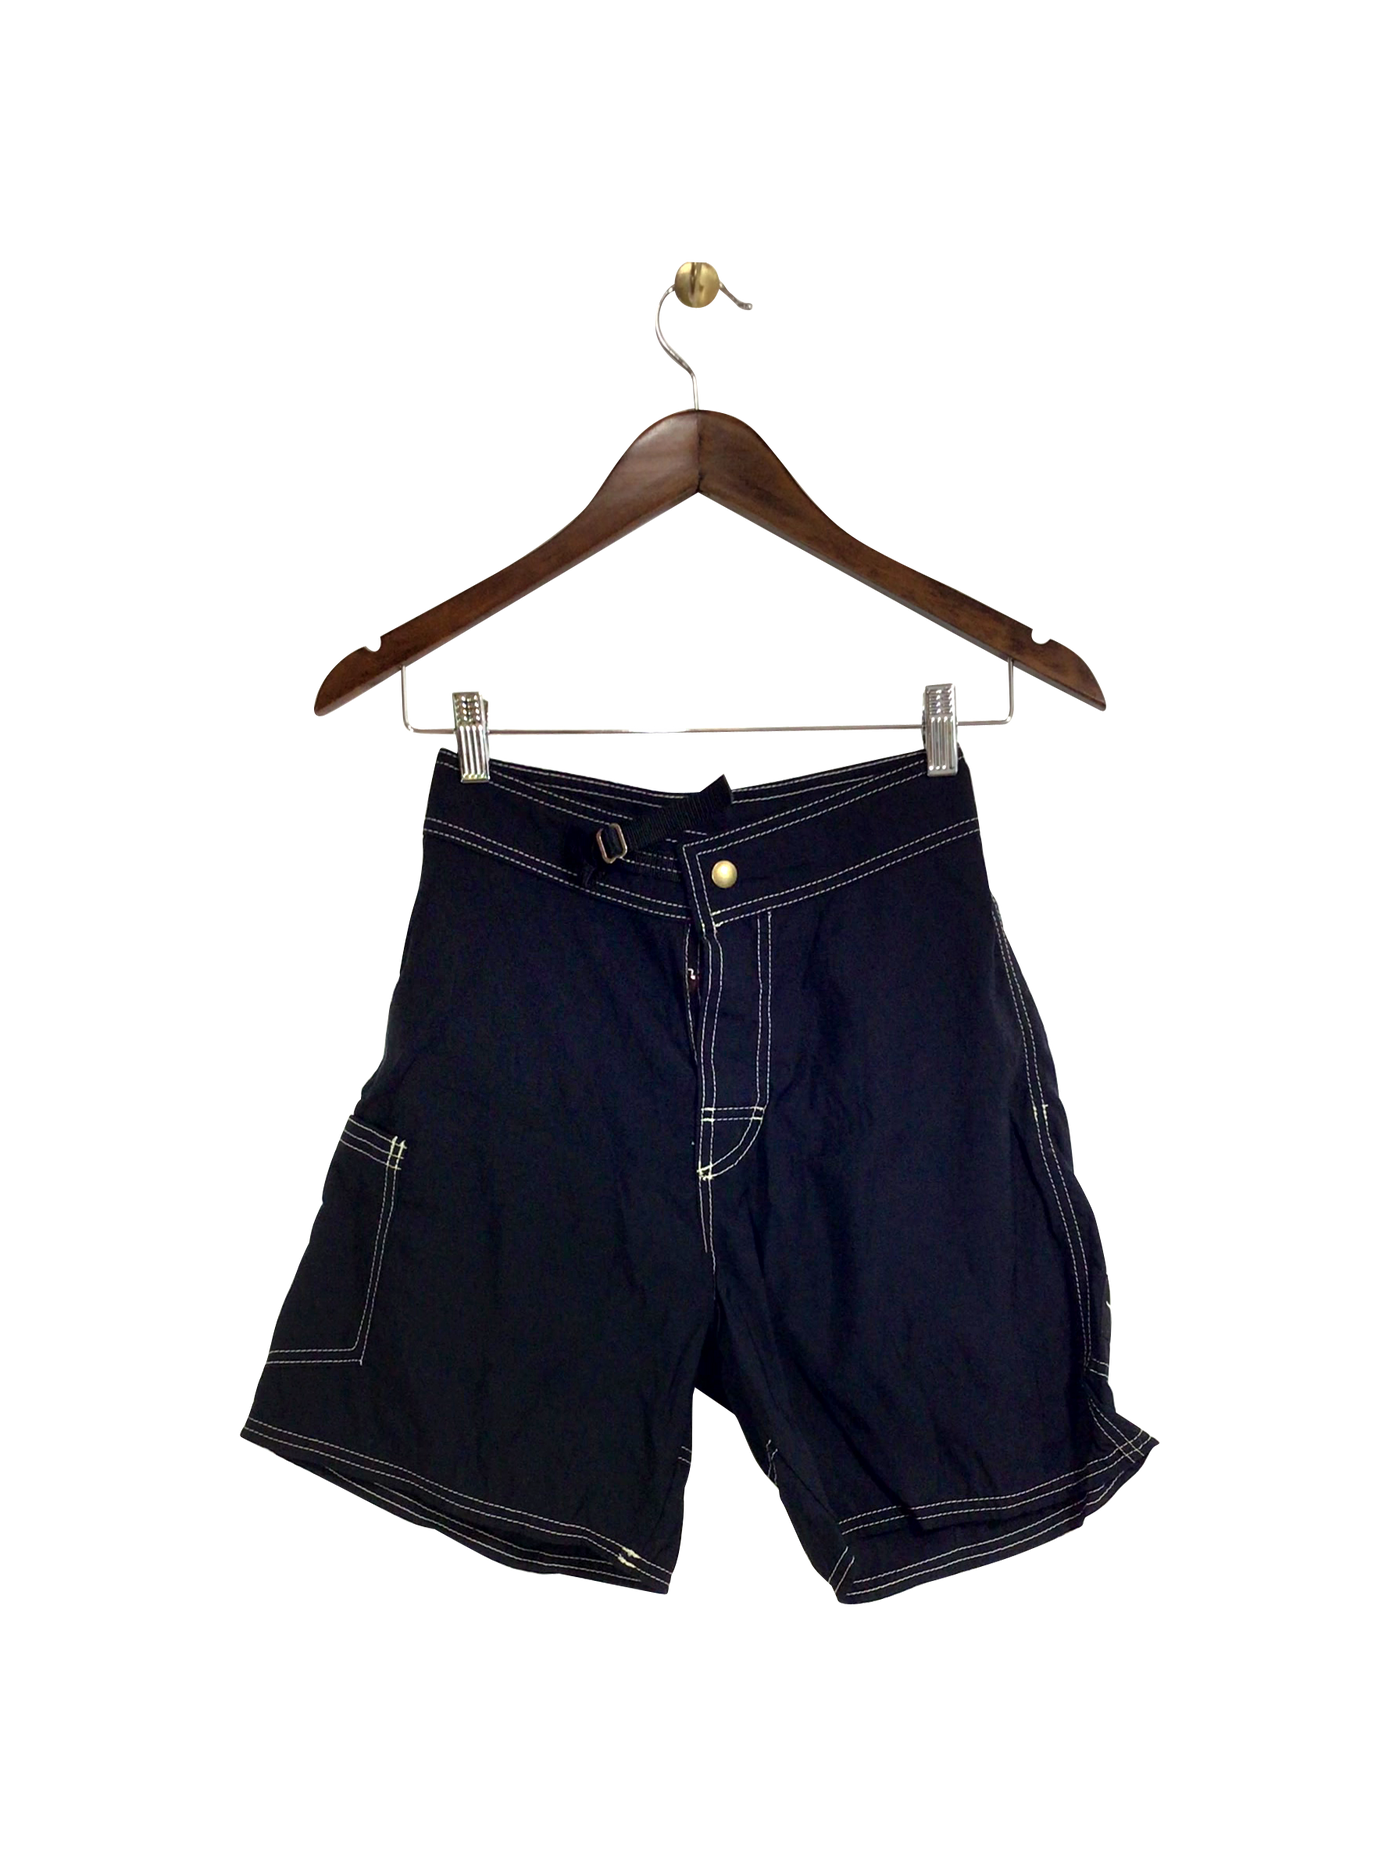 UNBRANDED Pant Shorts Regular fit in Black - Size XS | 7.99 $ KOOP